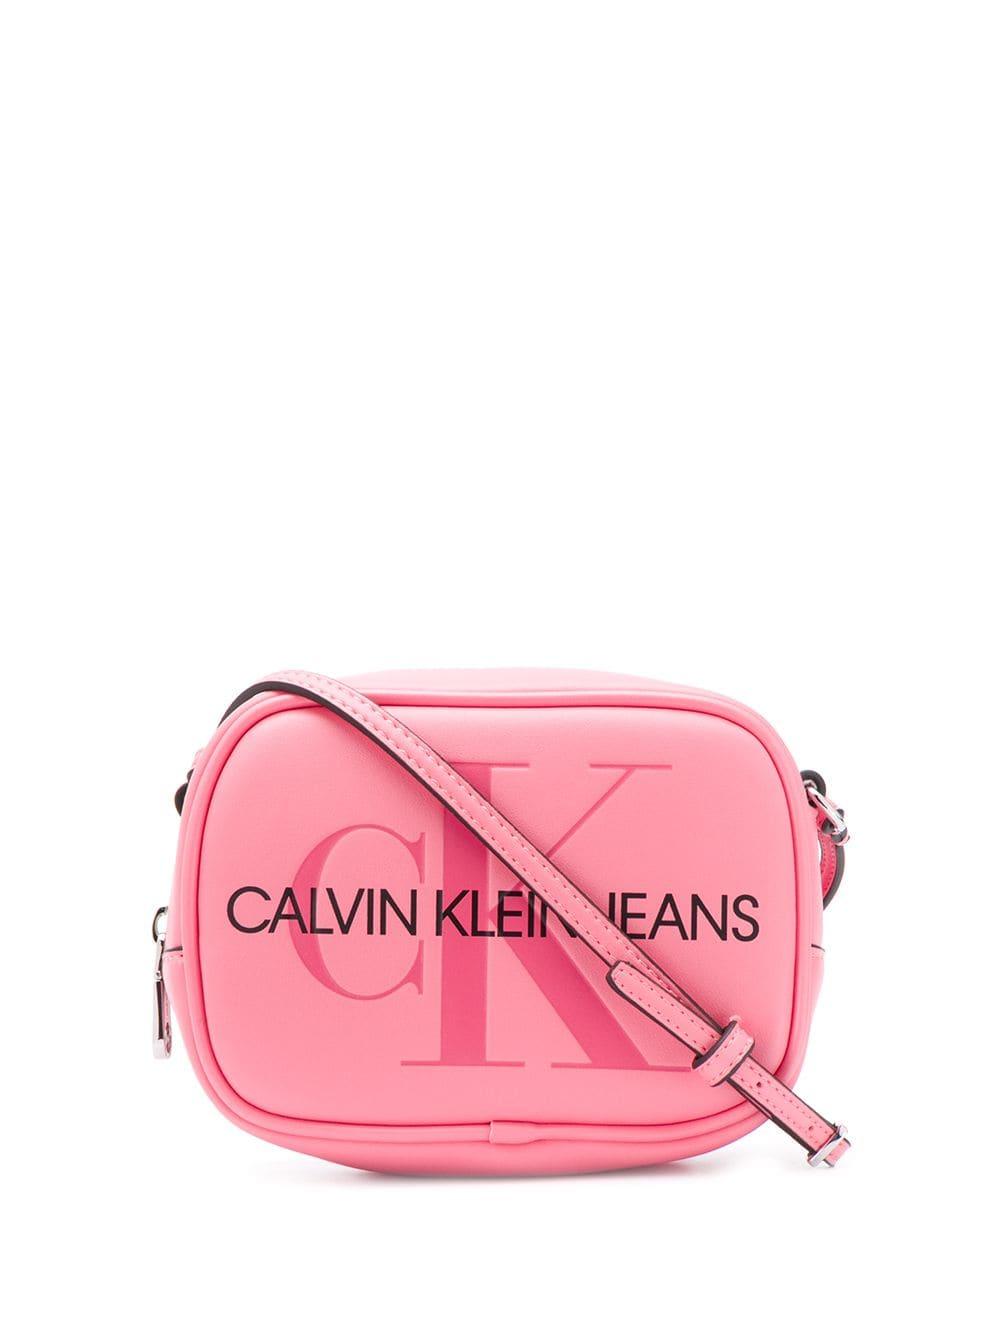 Calvin Klein Sculpted Monogram Camera Bag in Pink Lyst